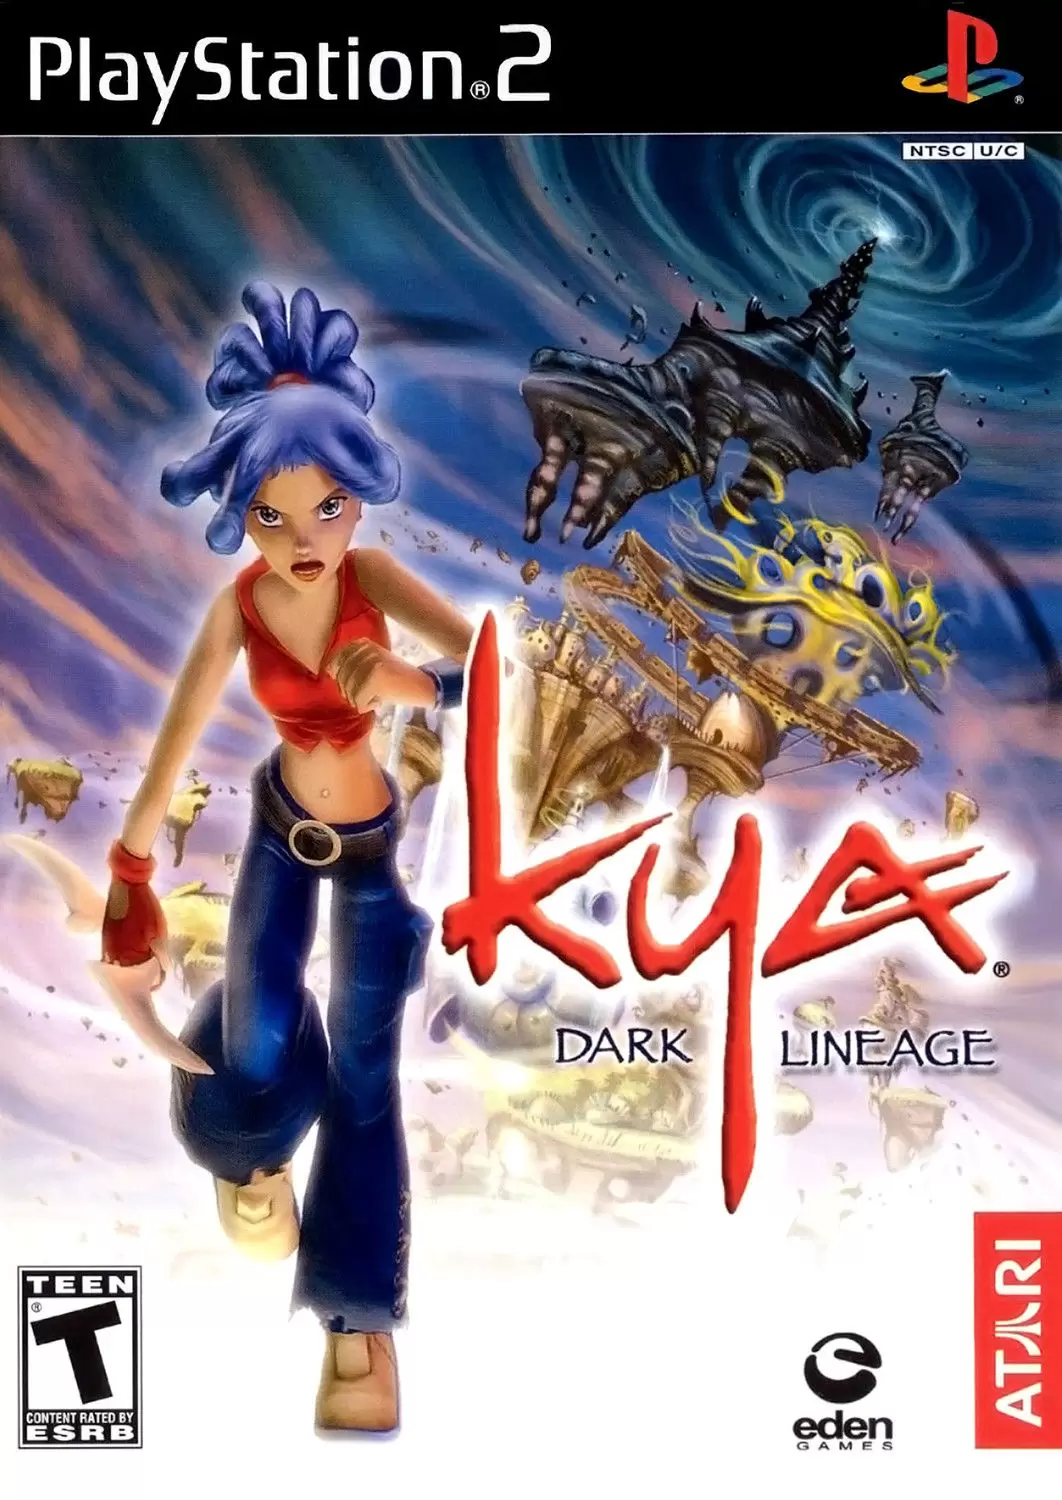 PS2 Games - Kya: Dark Lineage